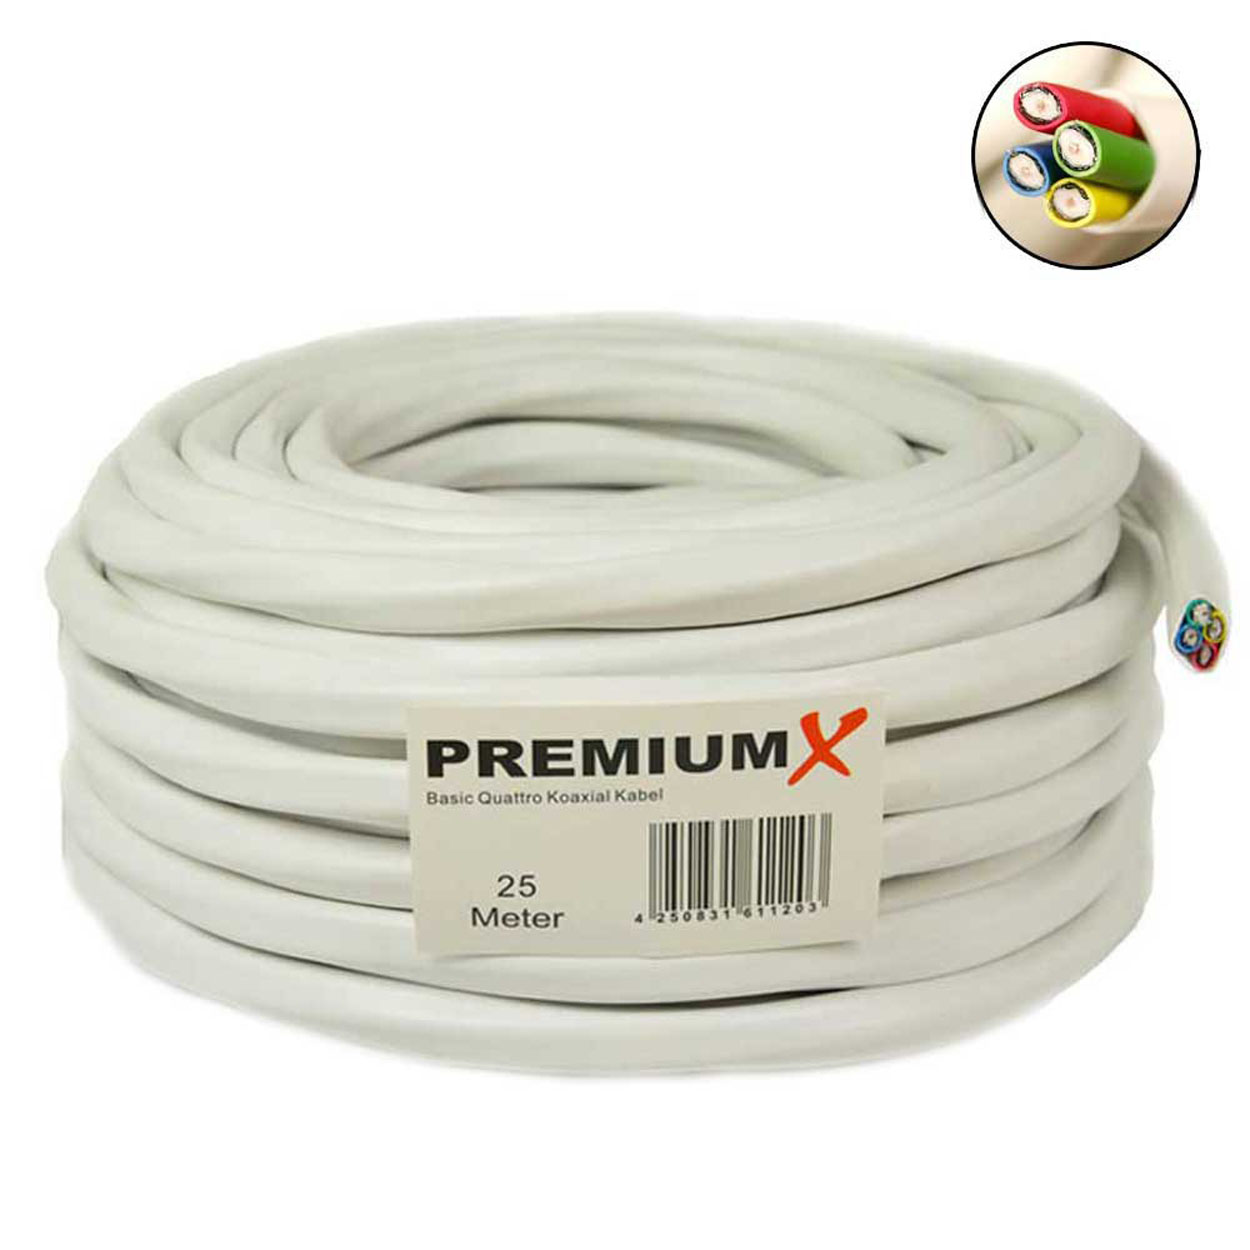 PREMIUMX 25m Basic Quattro Quad Kabel 16x Koaxial Weiß Antennenkabel 90dB SAT F-Stecker